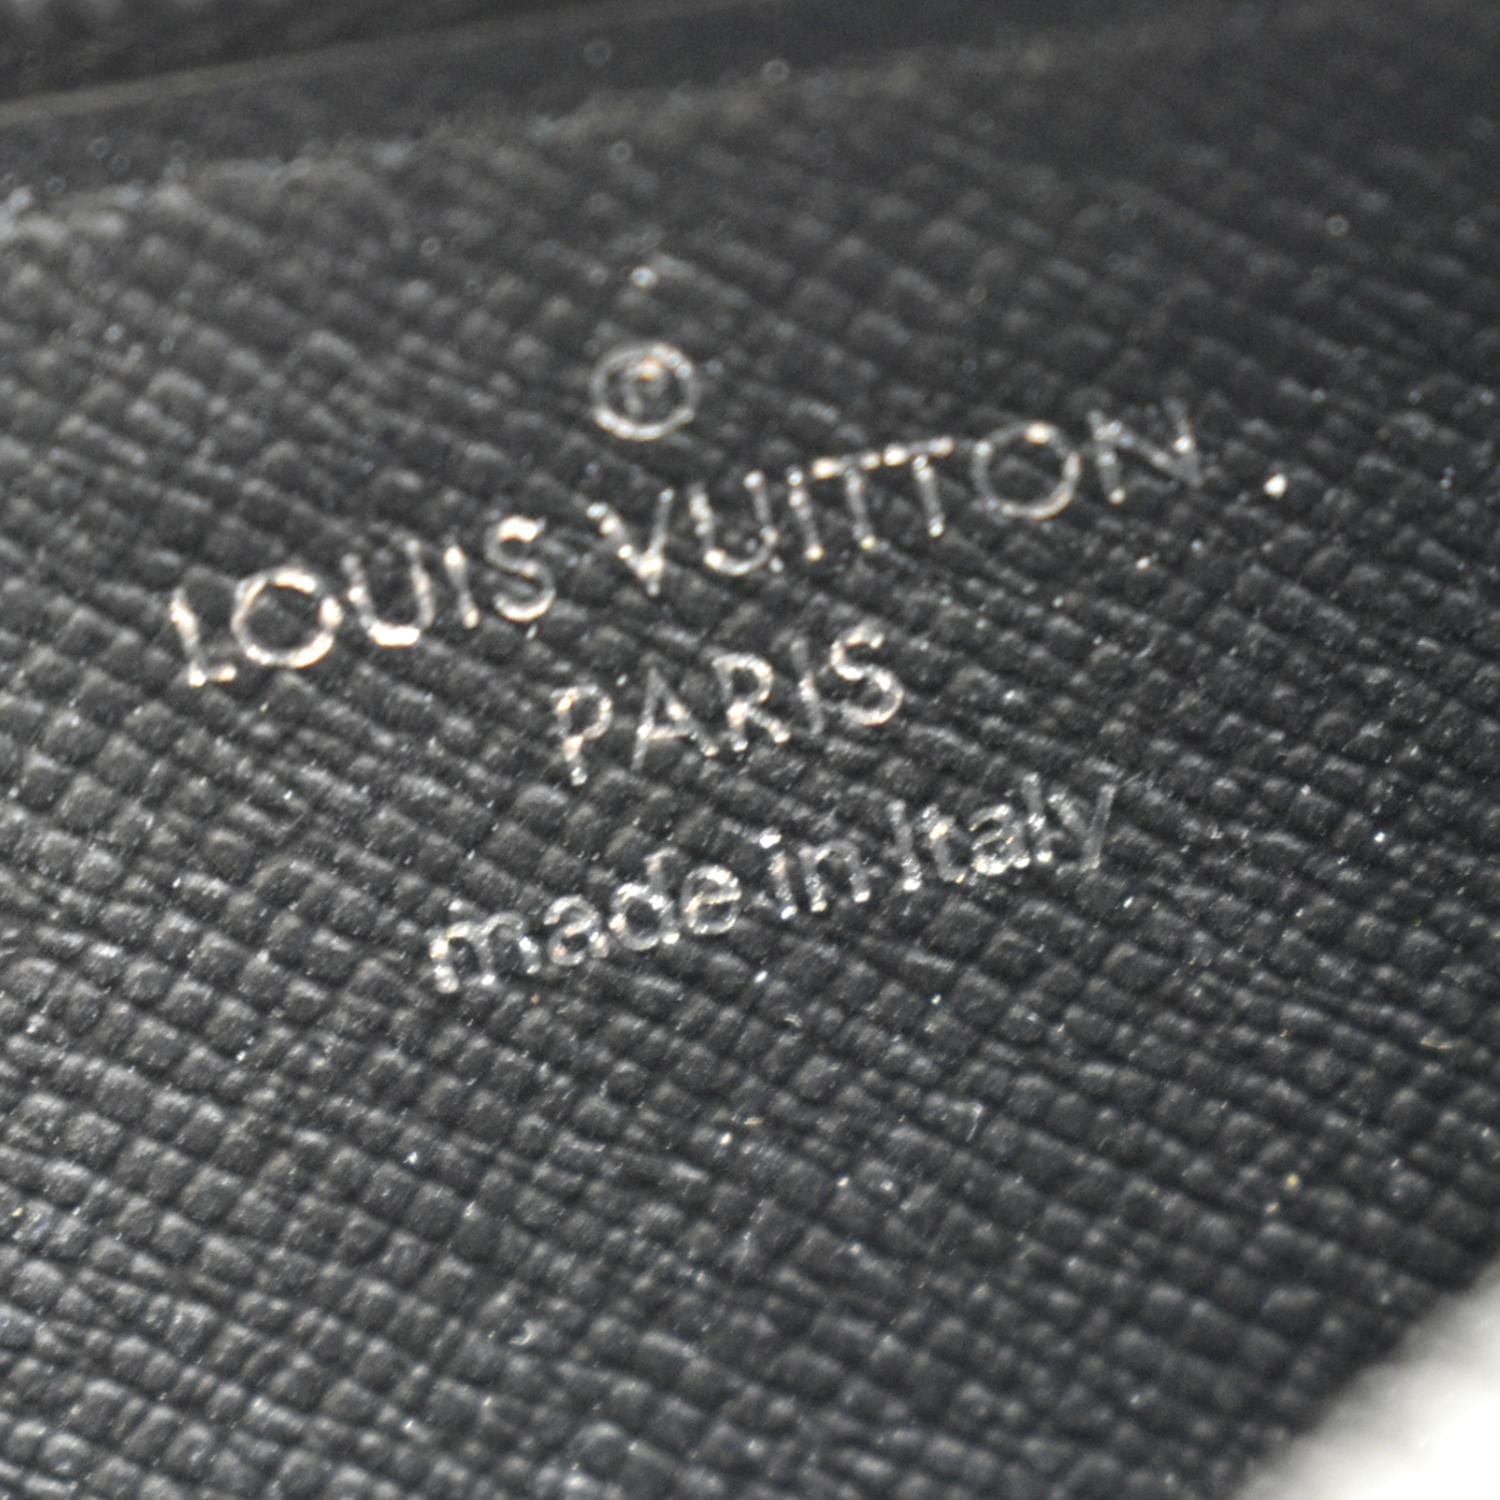 Louis Vuitton Monogram Eclipse Coin Card Holder